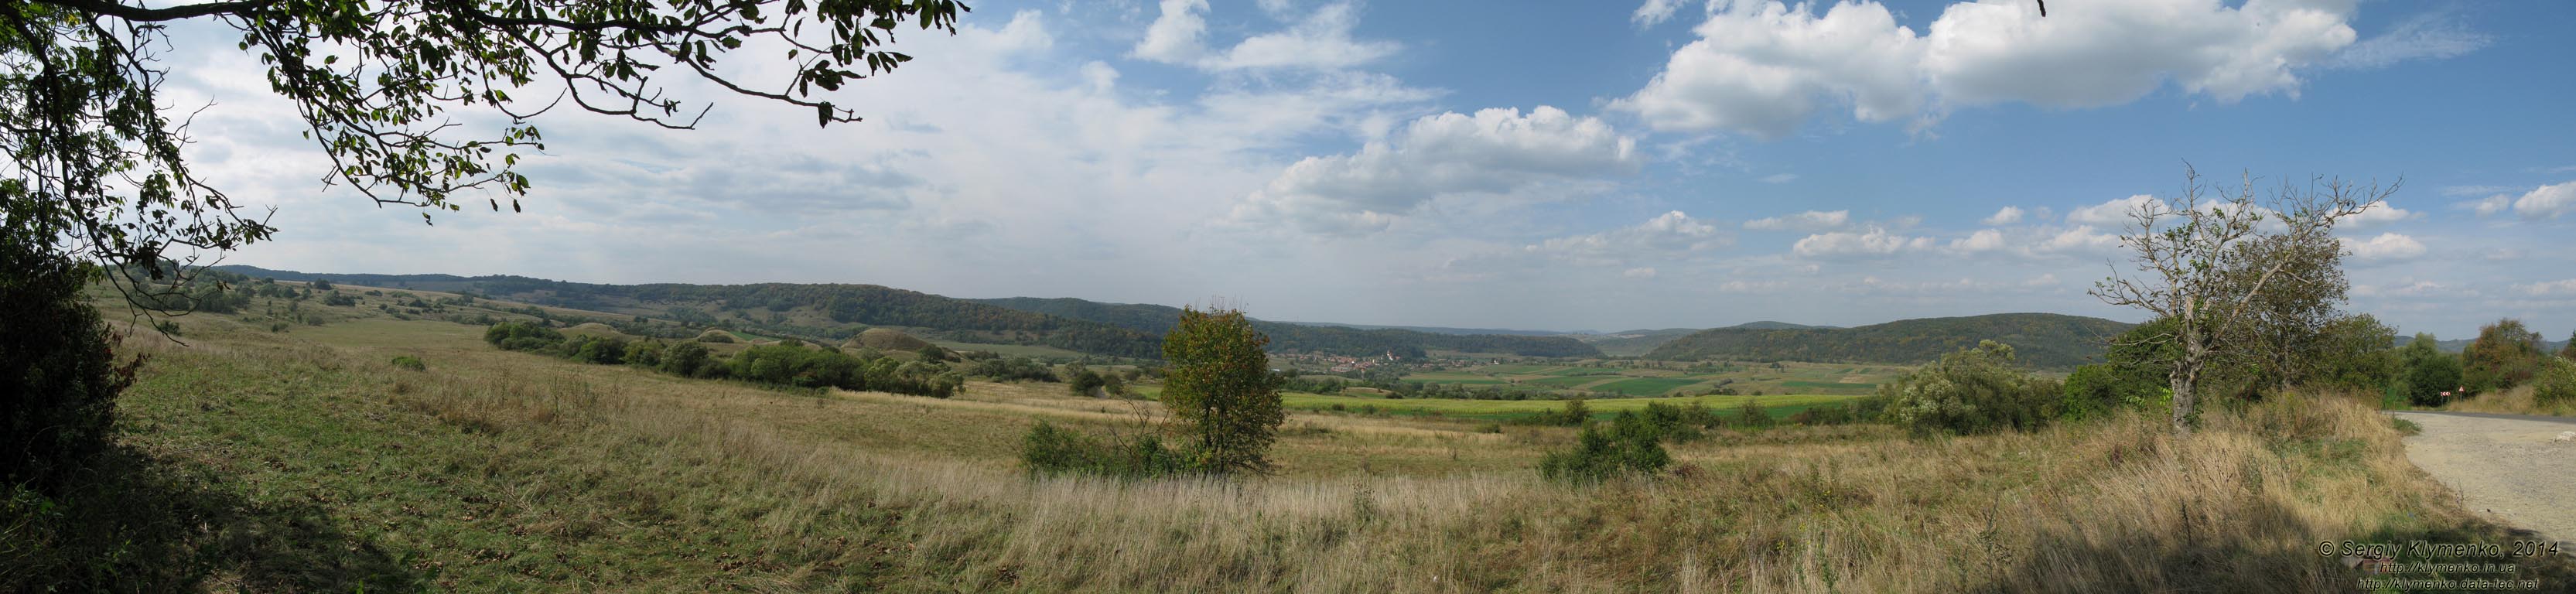 Румыния (Romania), панорама возле села Аполд (Apold, Mure?). Фото. Панорама ~150° (46°06'27"N, 24°50'27"E).